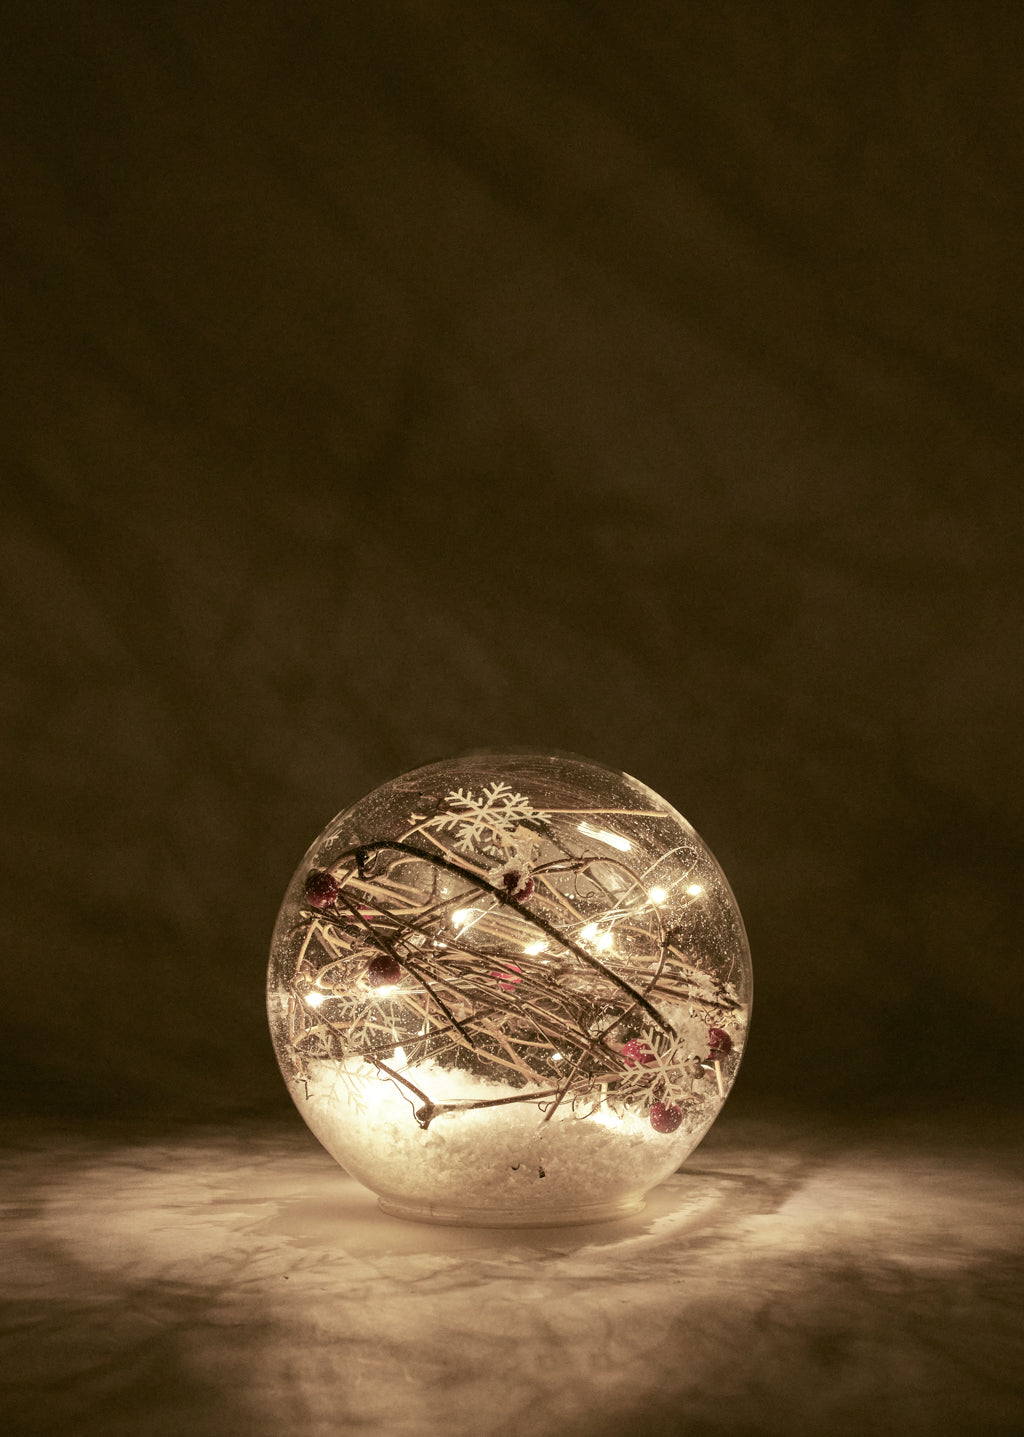 Medium Lighted Glass Ball